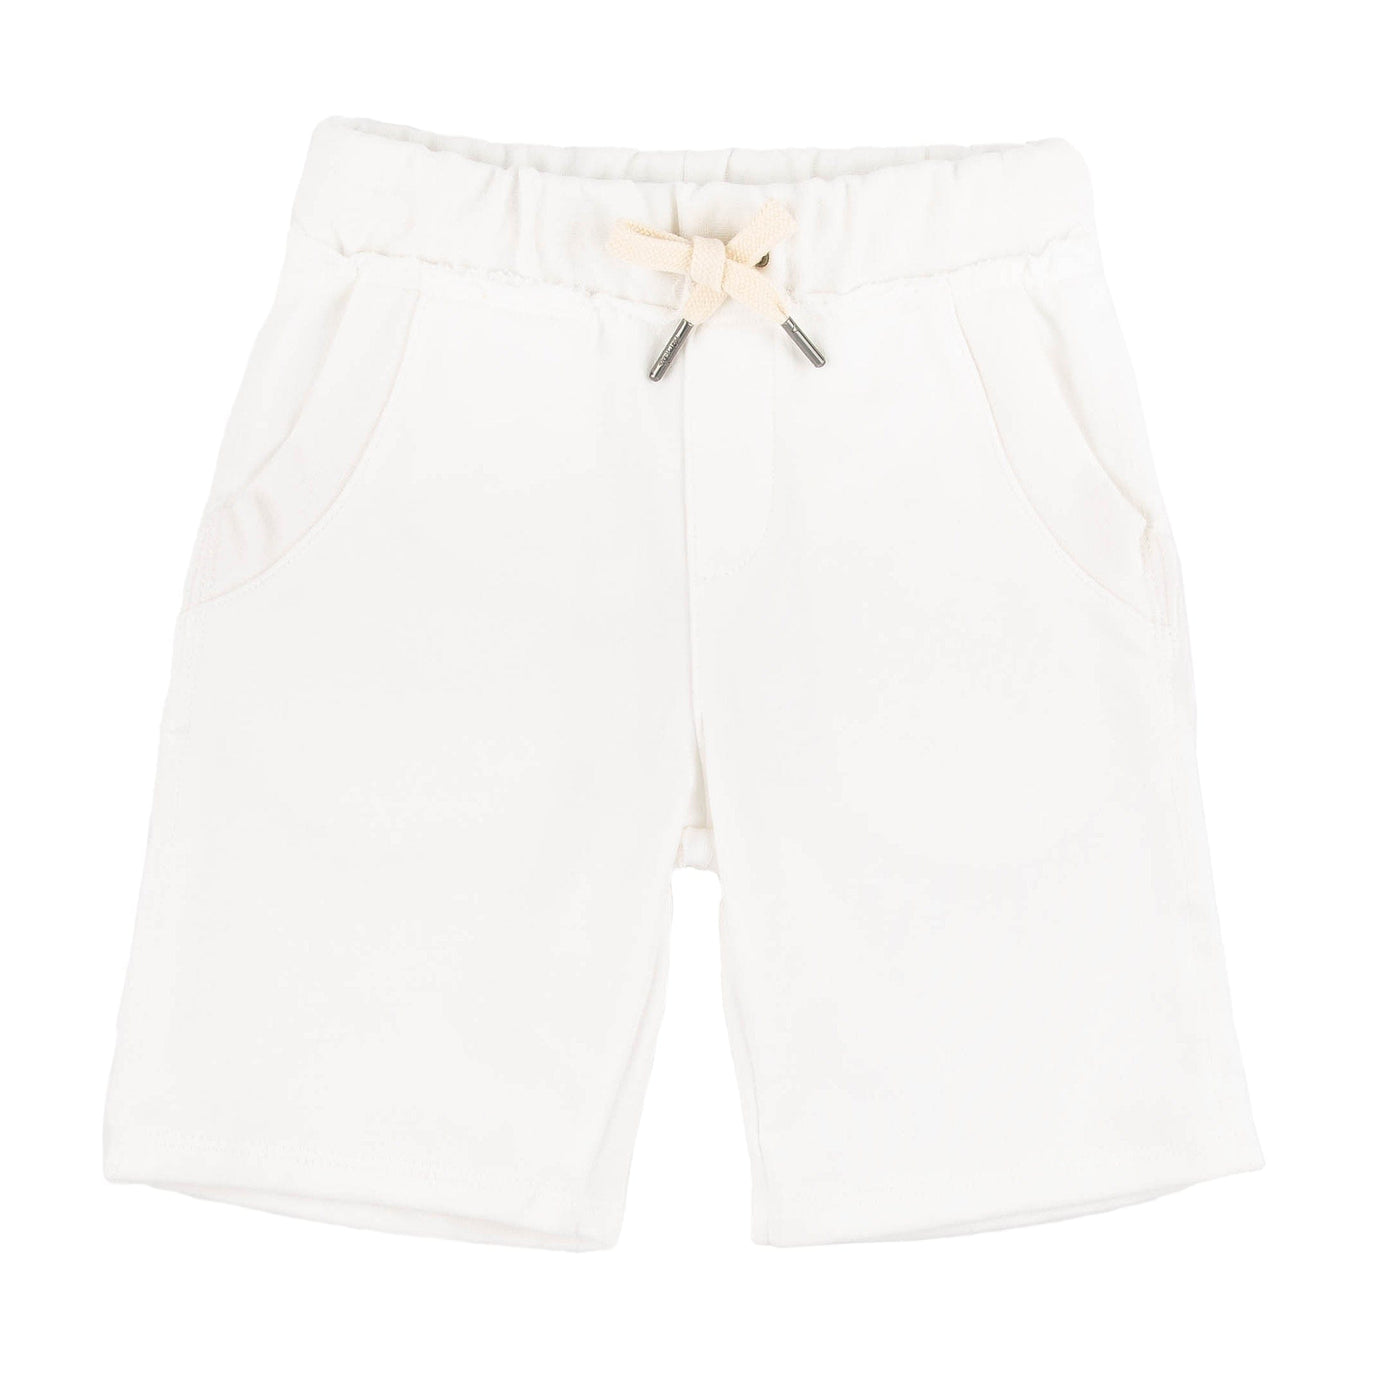 Basics WHITE / 3m Rusty Short White